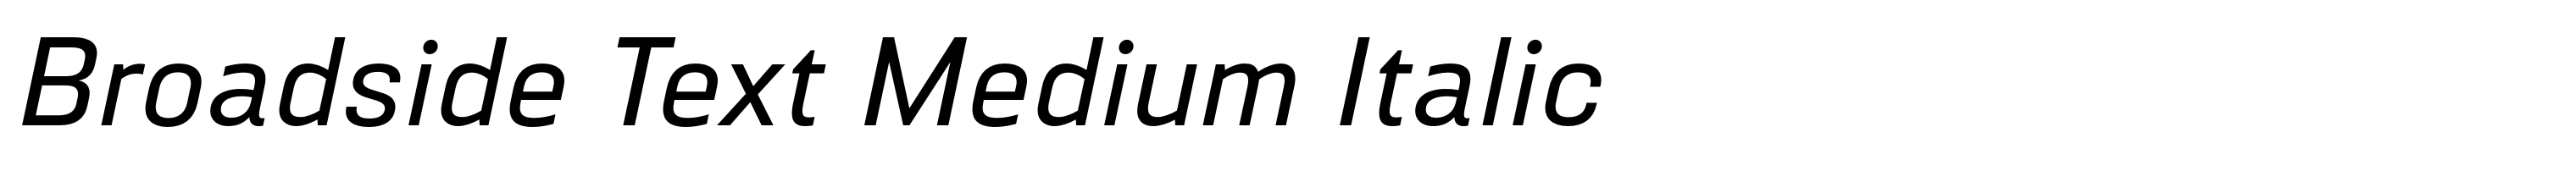 Broadside Text Medium Italic